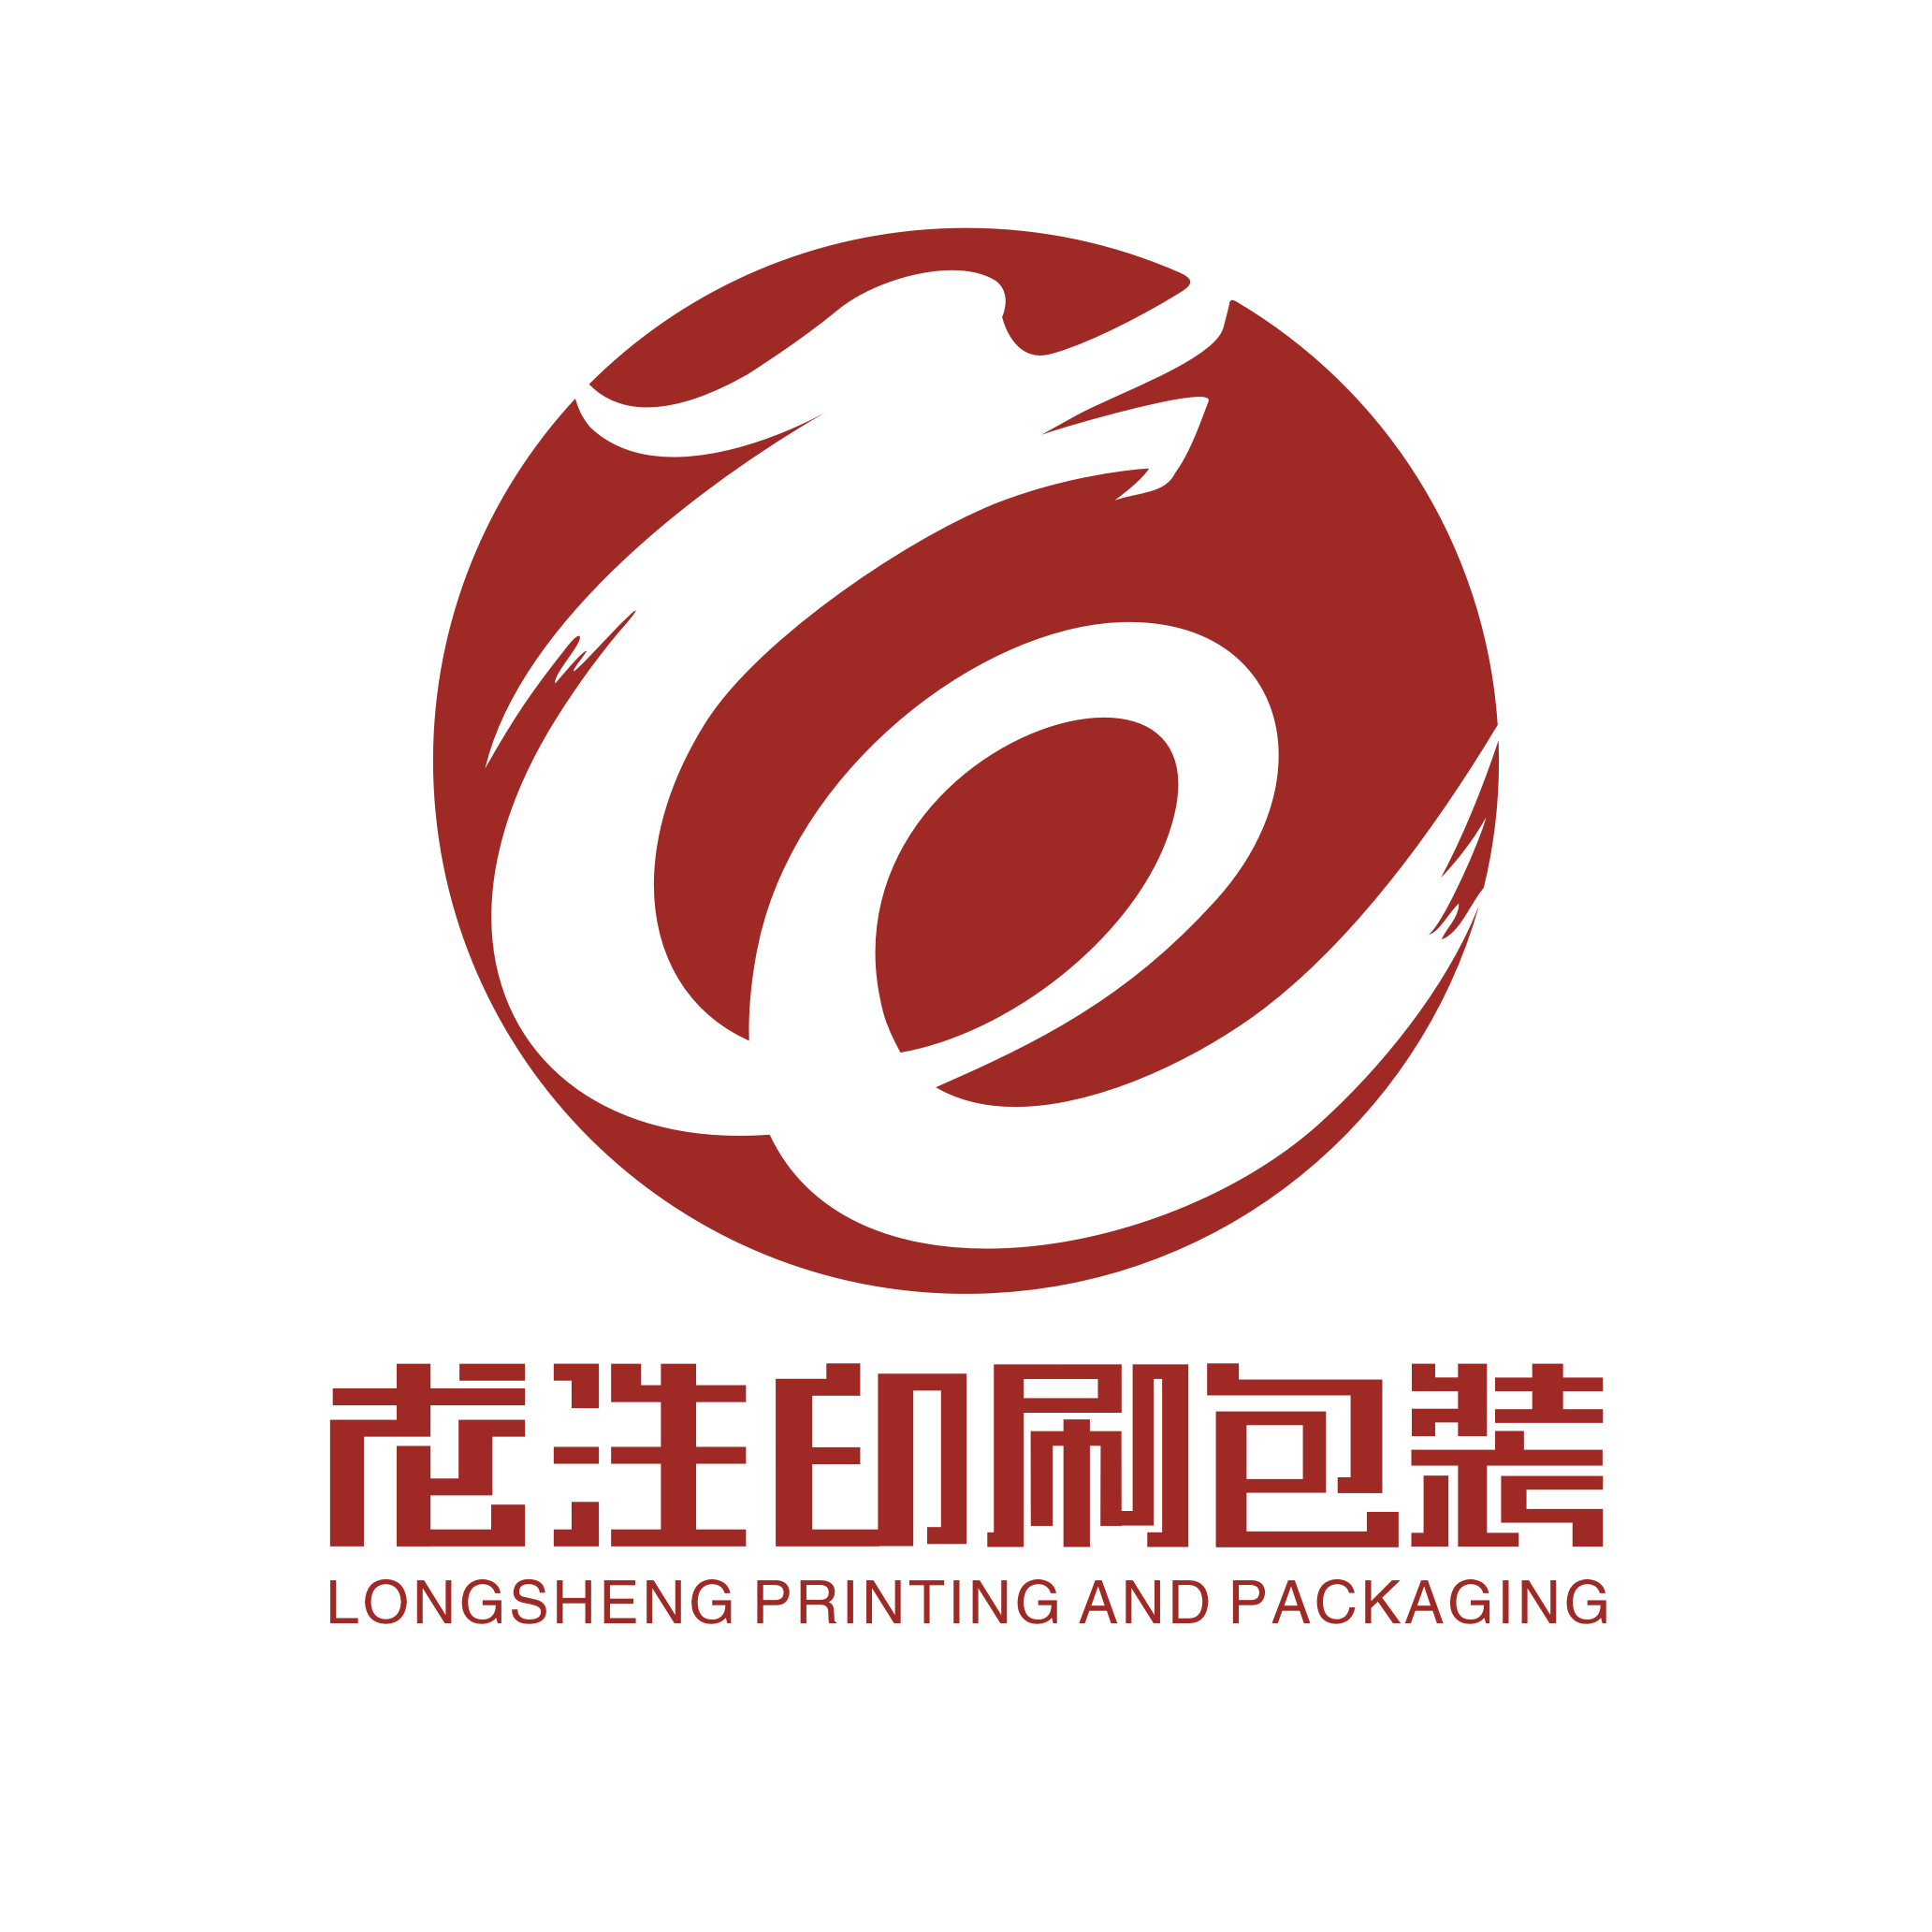 Shenzhen Longyu Printing and Packaging Co., Ltd